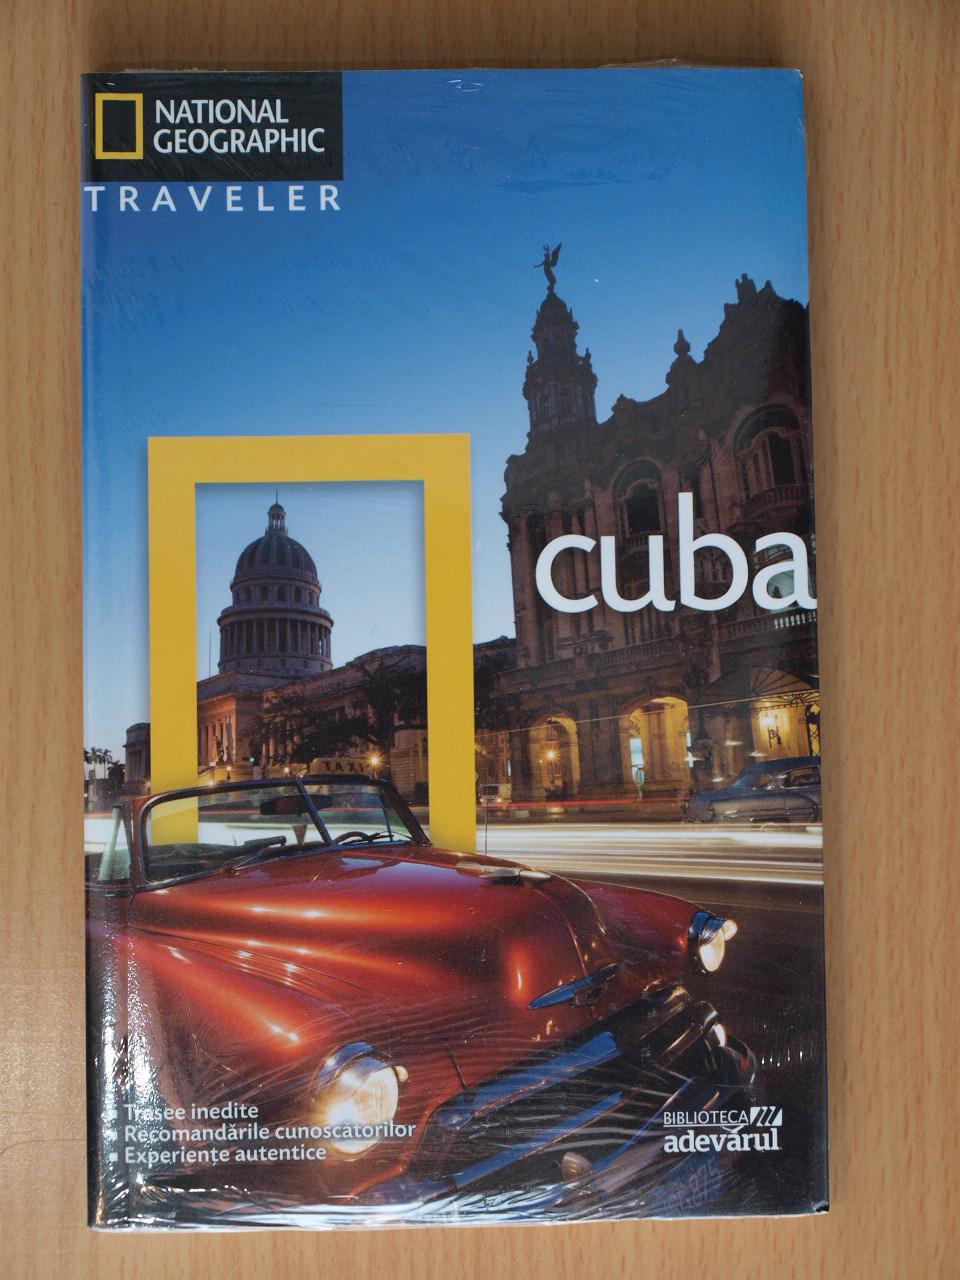 National Geographic: Острова. Куба / National Geographic: Islands. Cuba (2011)